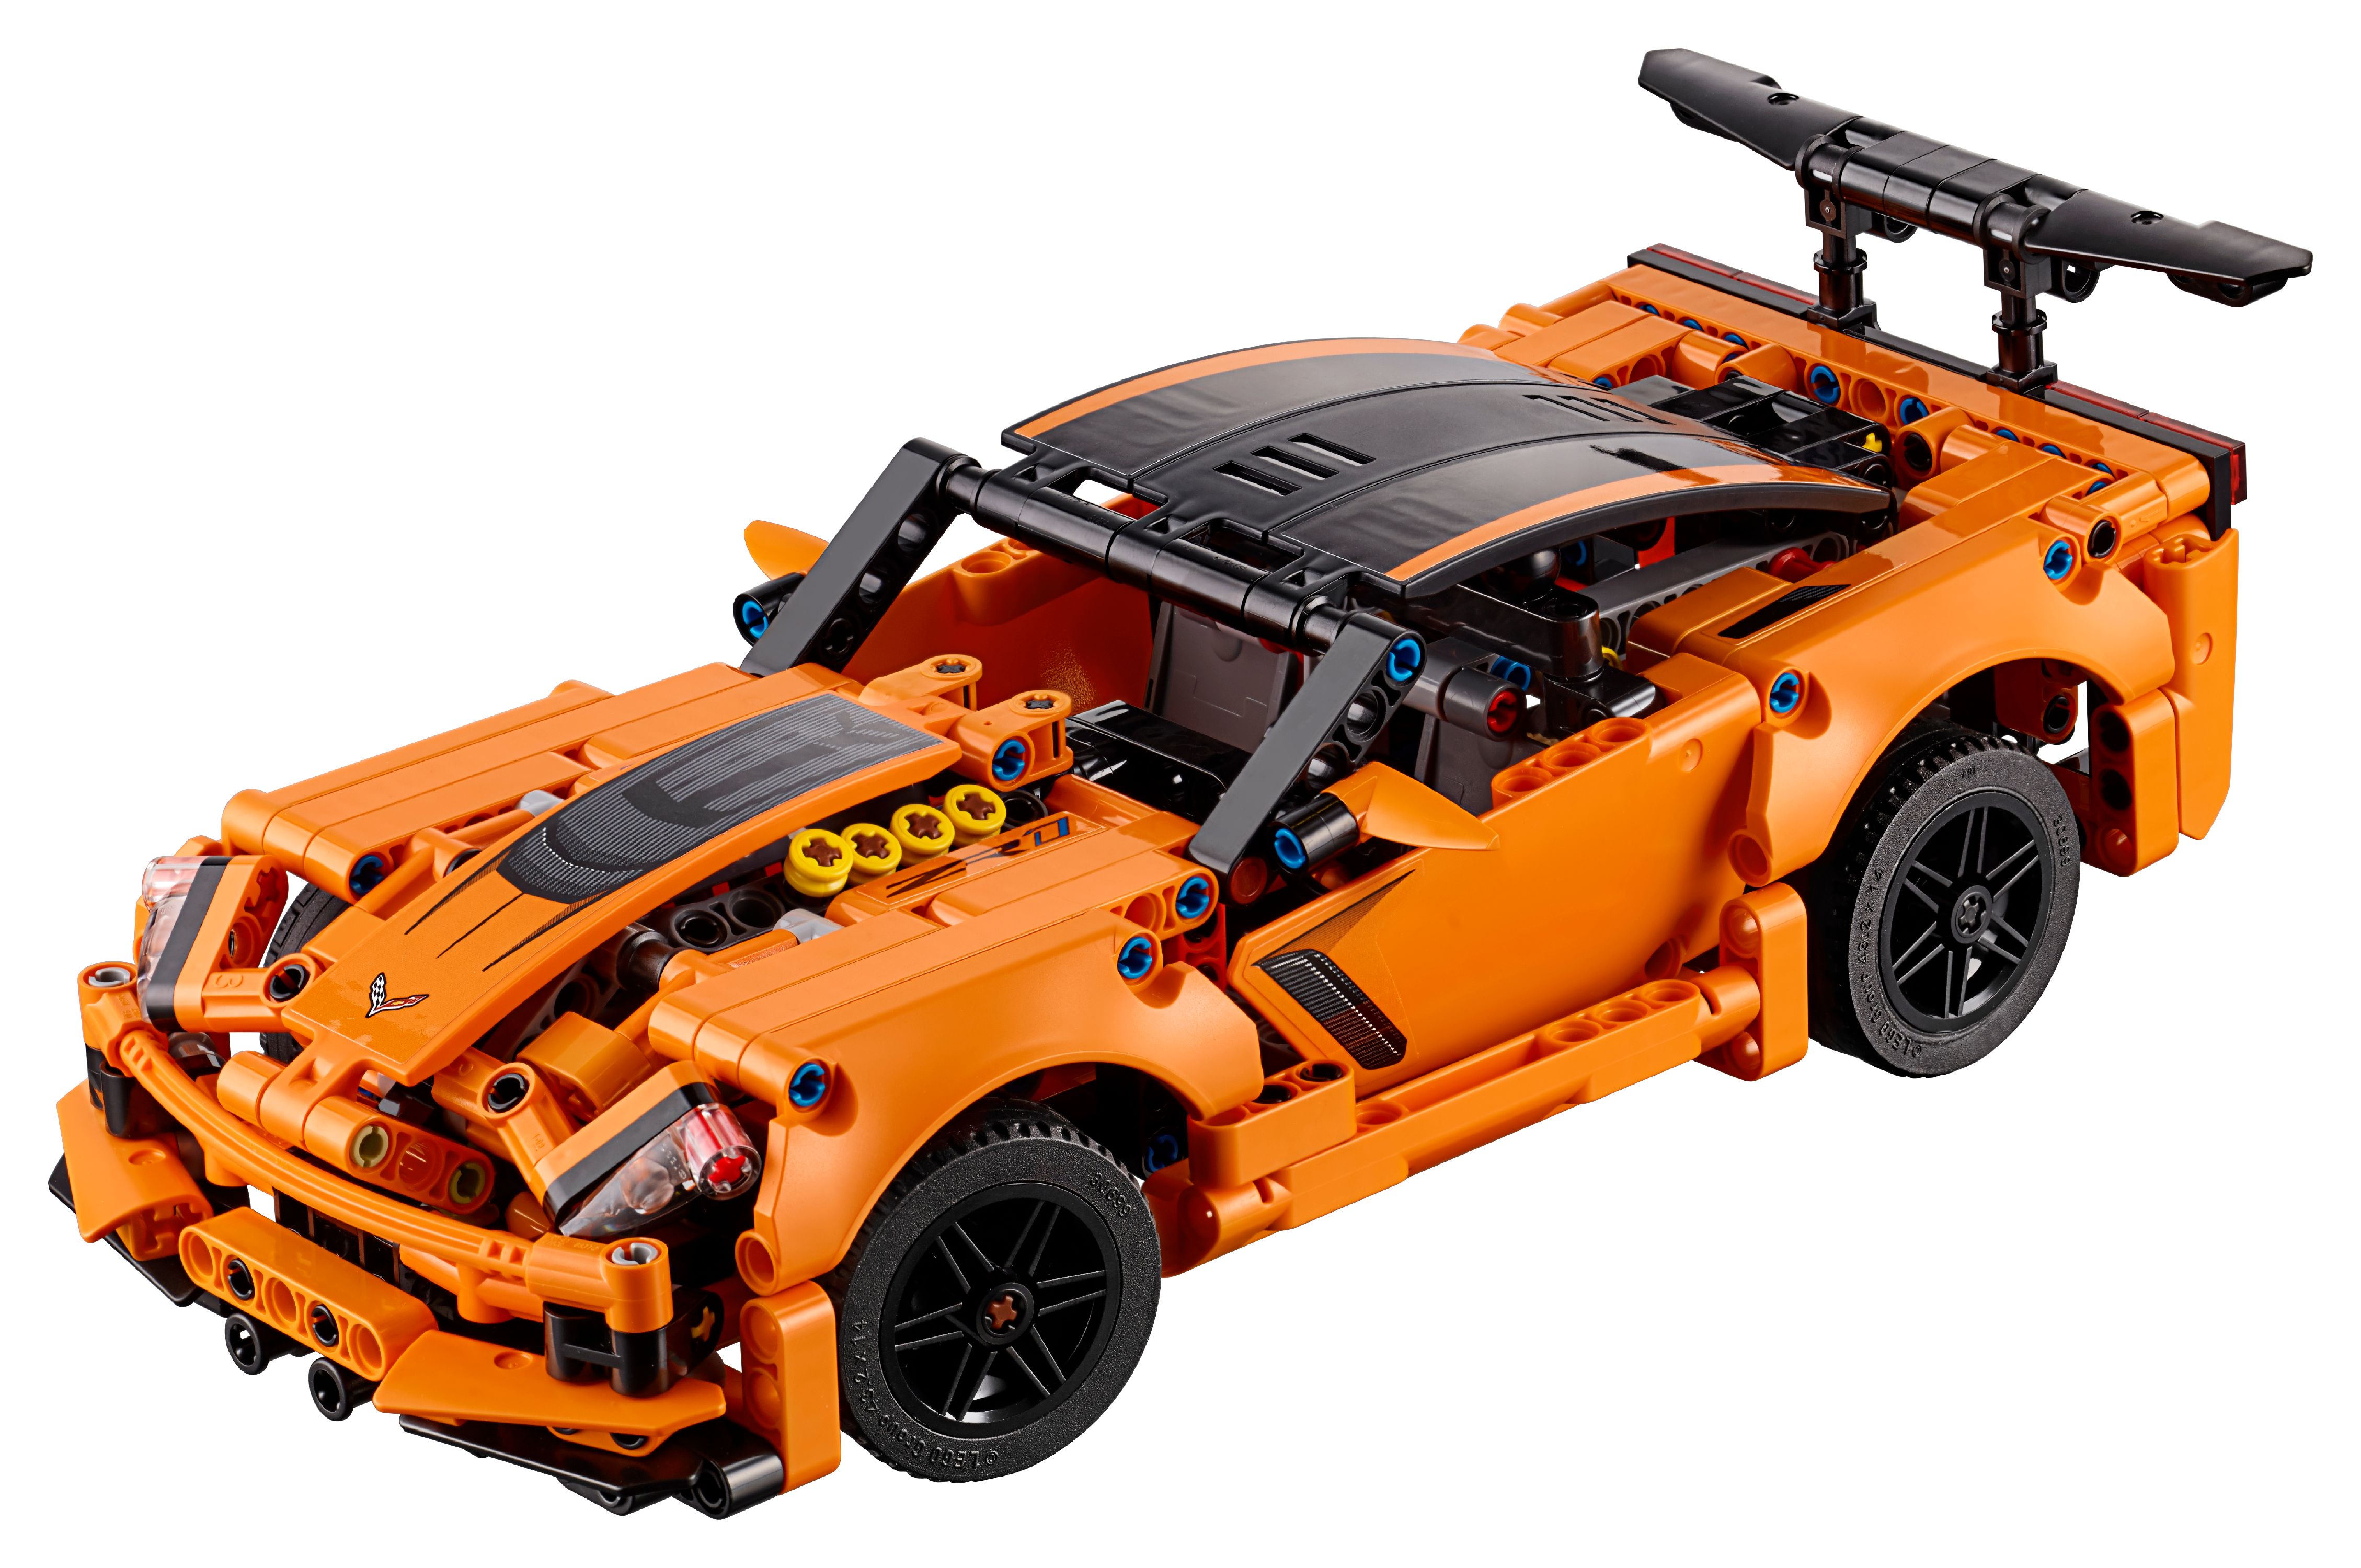 LEGO Technic Chevrolet Corvette ZR1 42093 Model Car Building Set - image 3 of 8